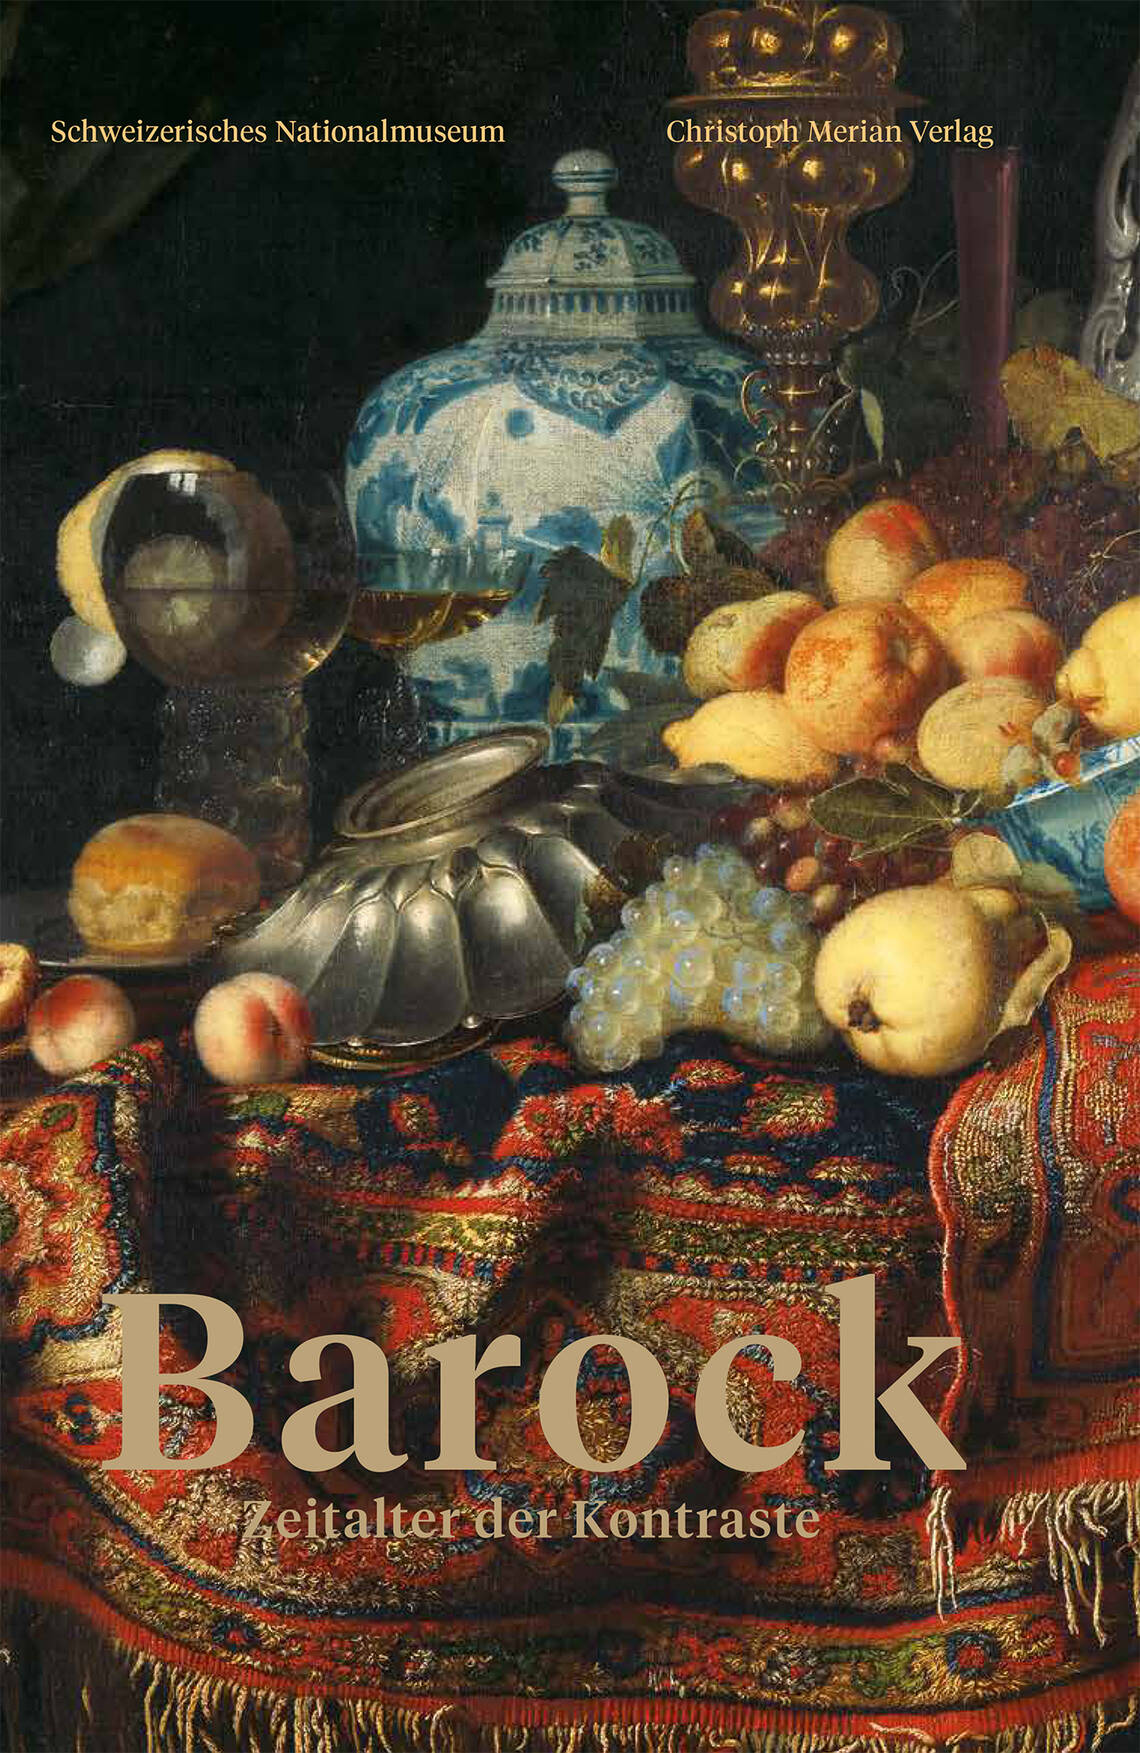 Titelseite der Publikation "Barock"